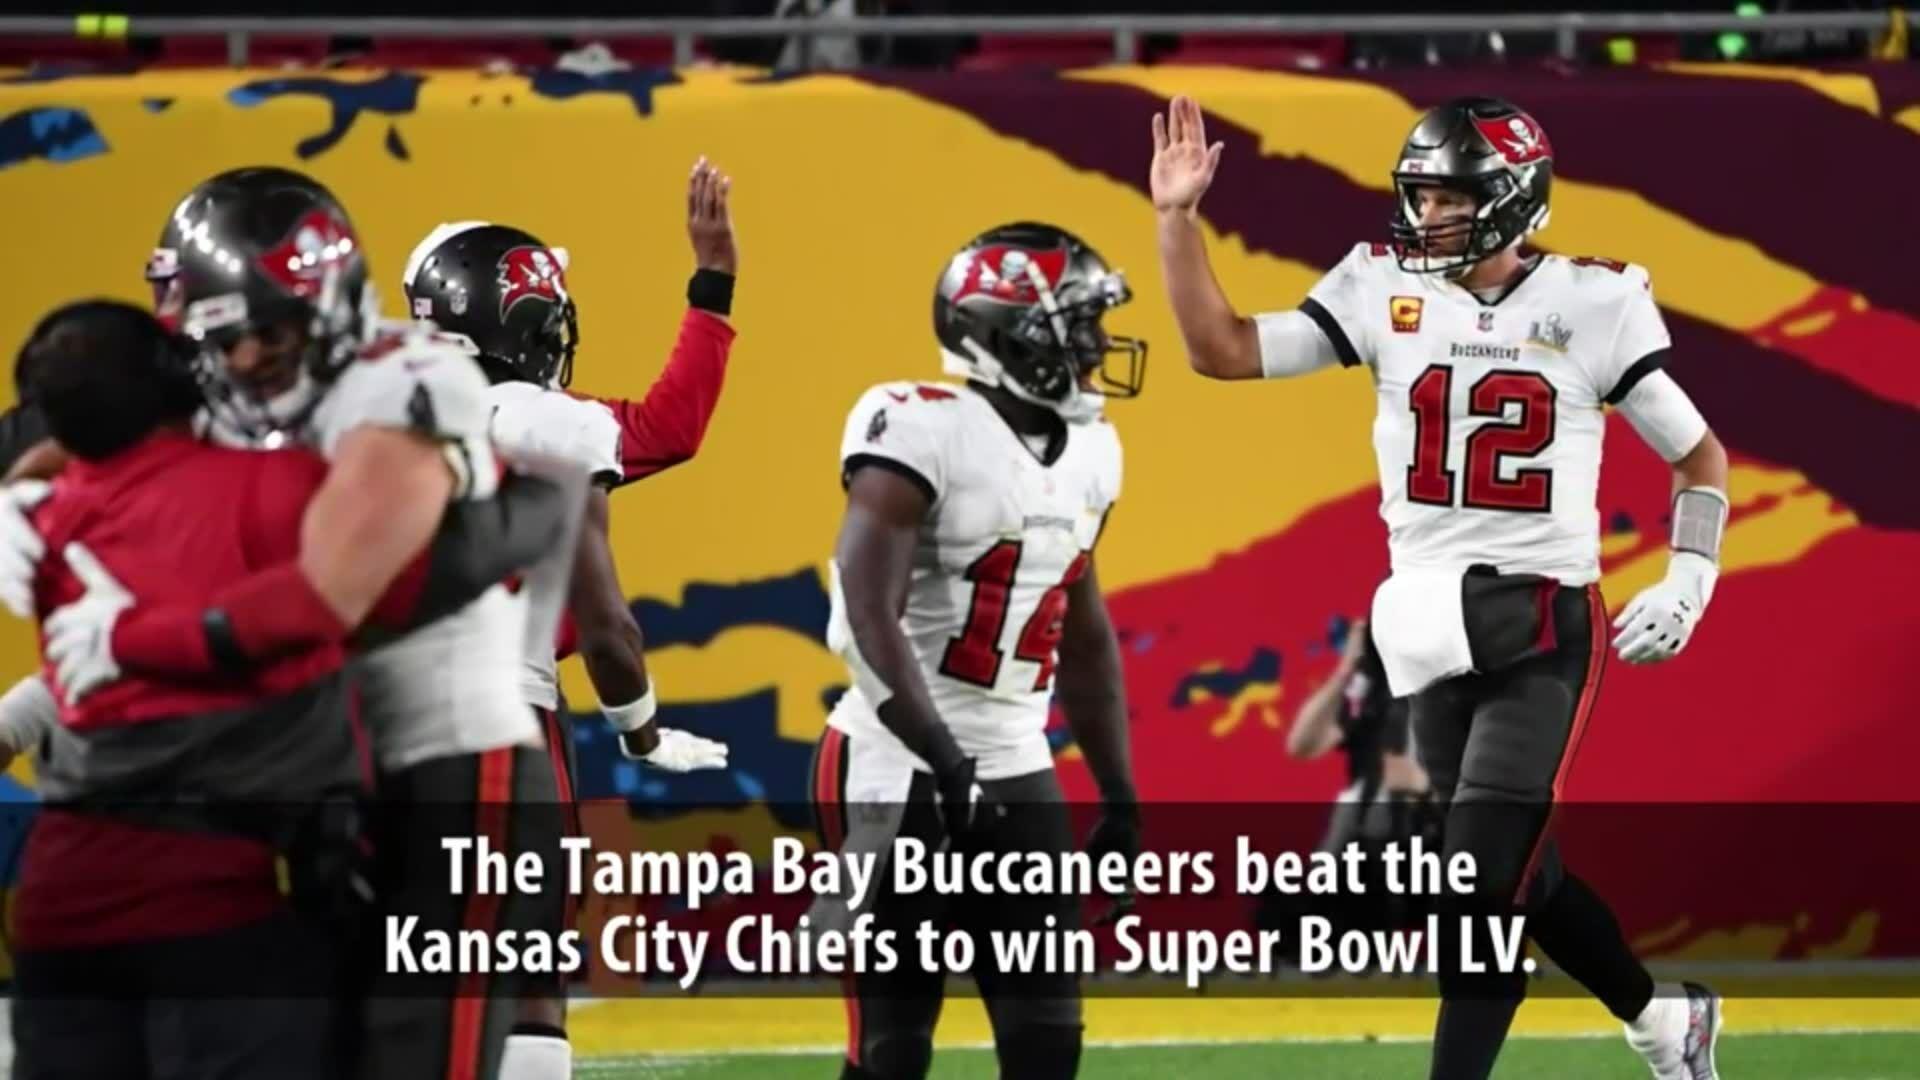 Buccaneers beat Chiefs 31-9 in Super Bowl LV